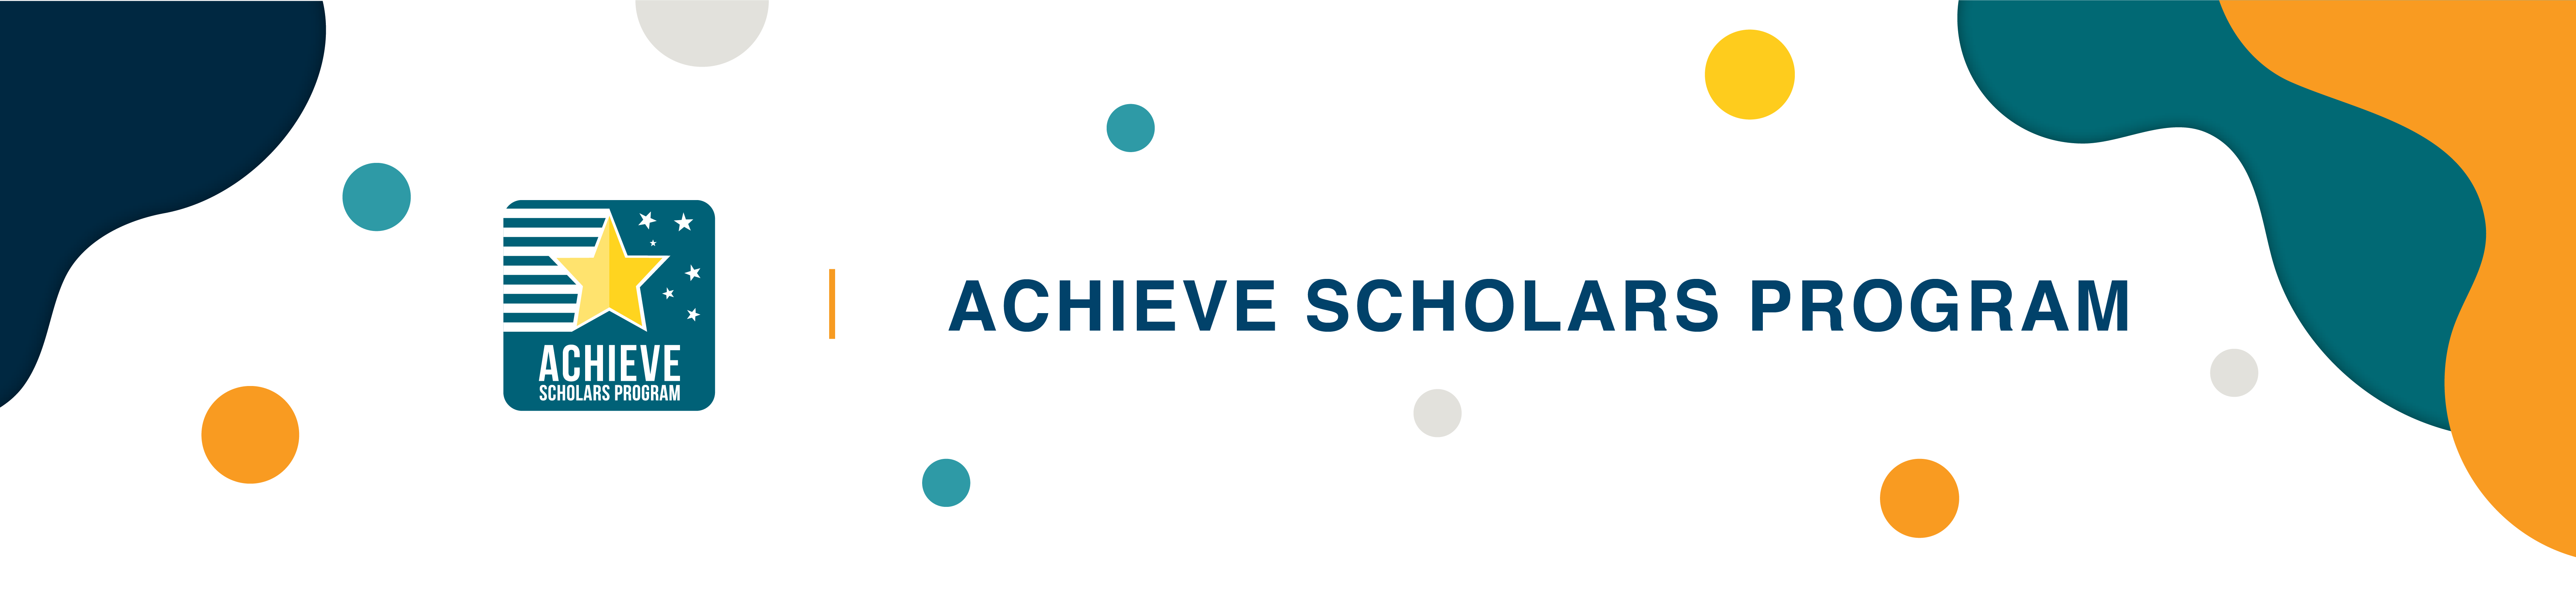 Achieve Scholars Program